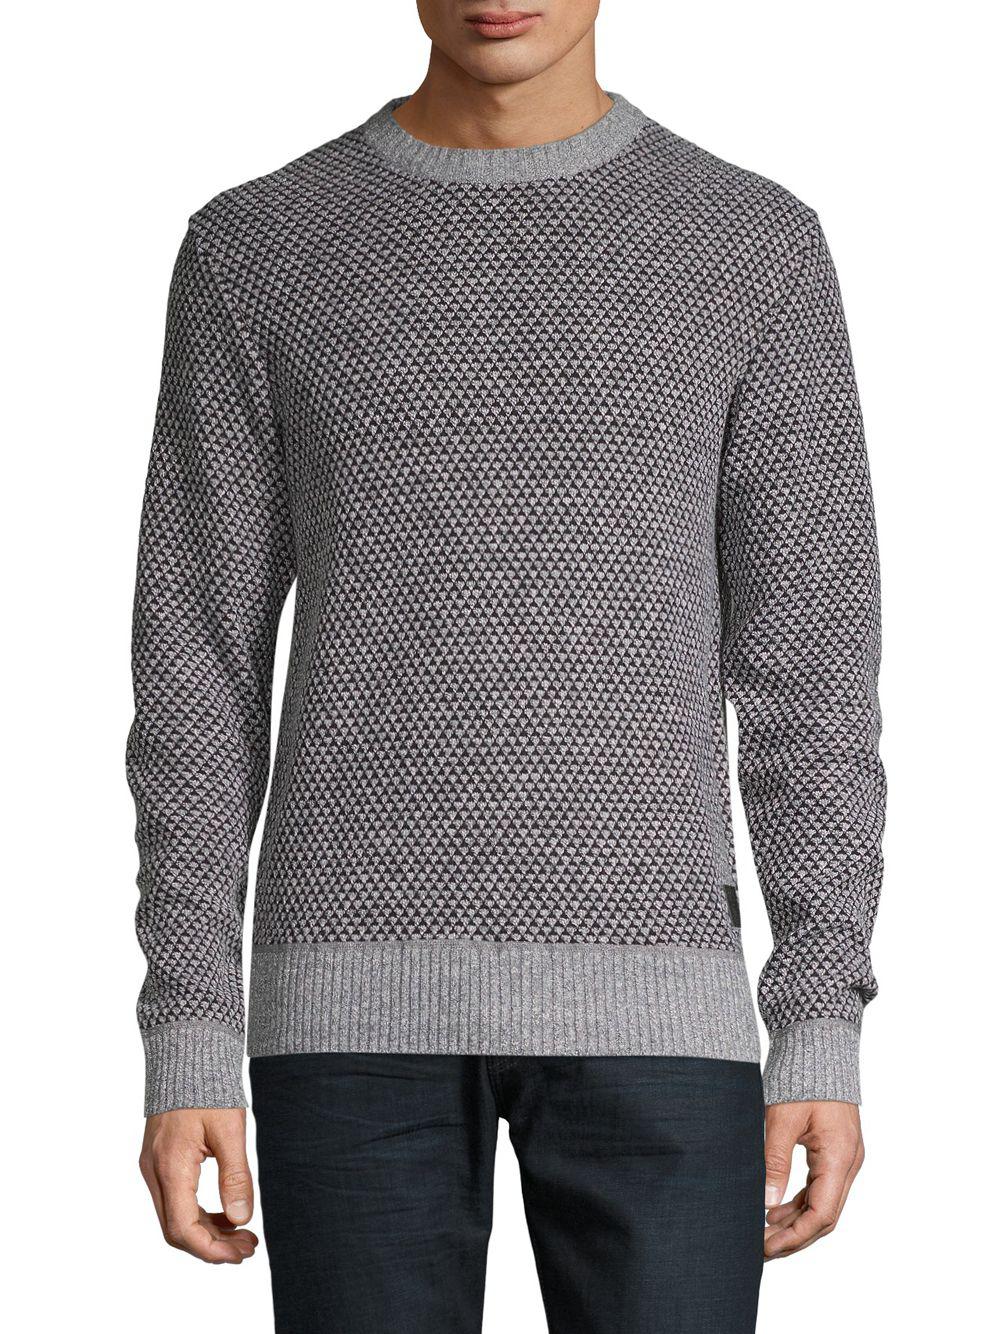 Lyst - Buffalo David Bitton Textured Crewneck Sweater in Gray for Men